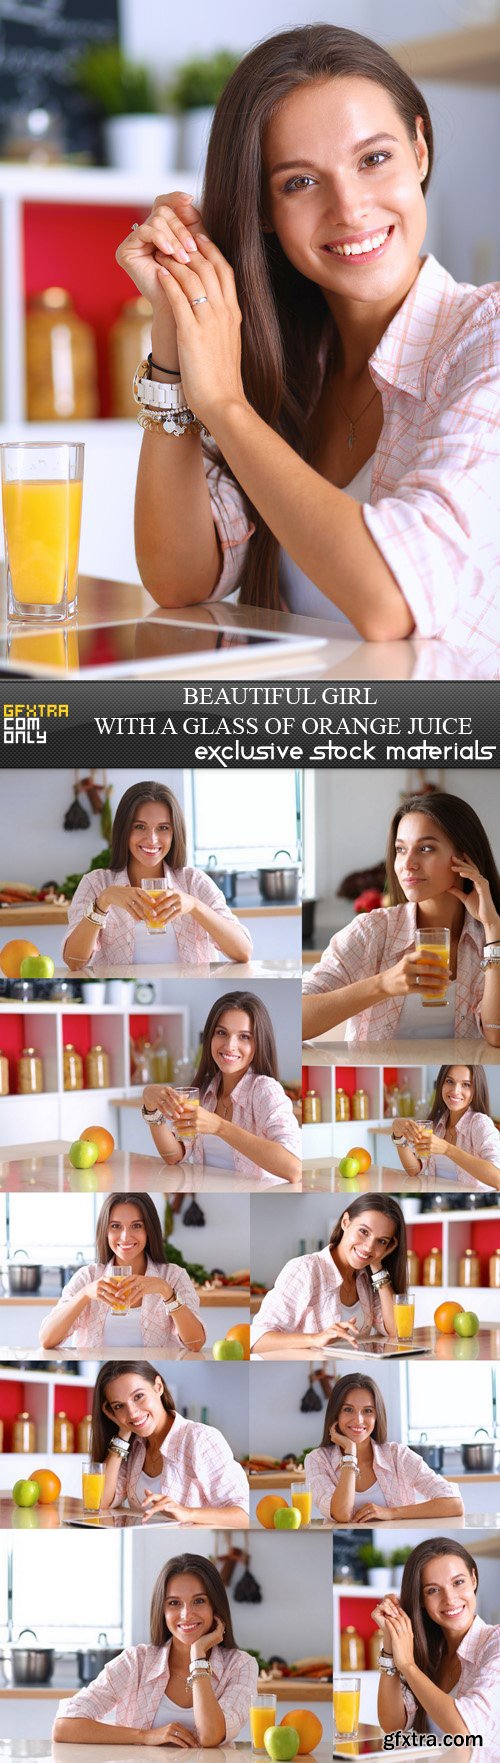 Beautiful Girl with a Glass of Orange Juice - 10 UHQ JPEG